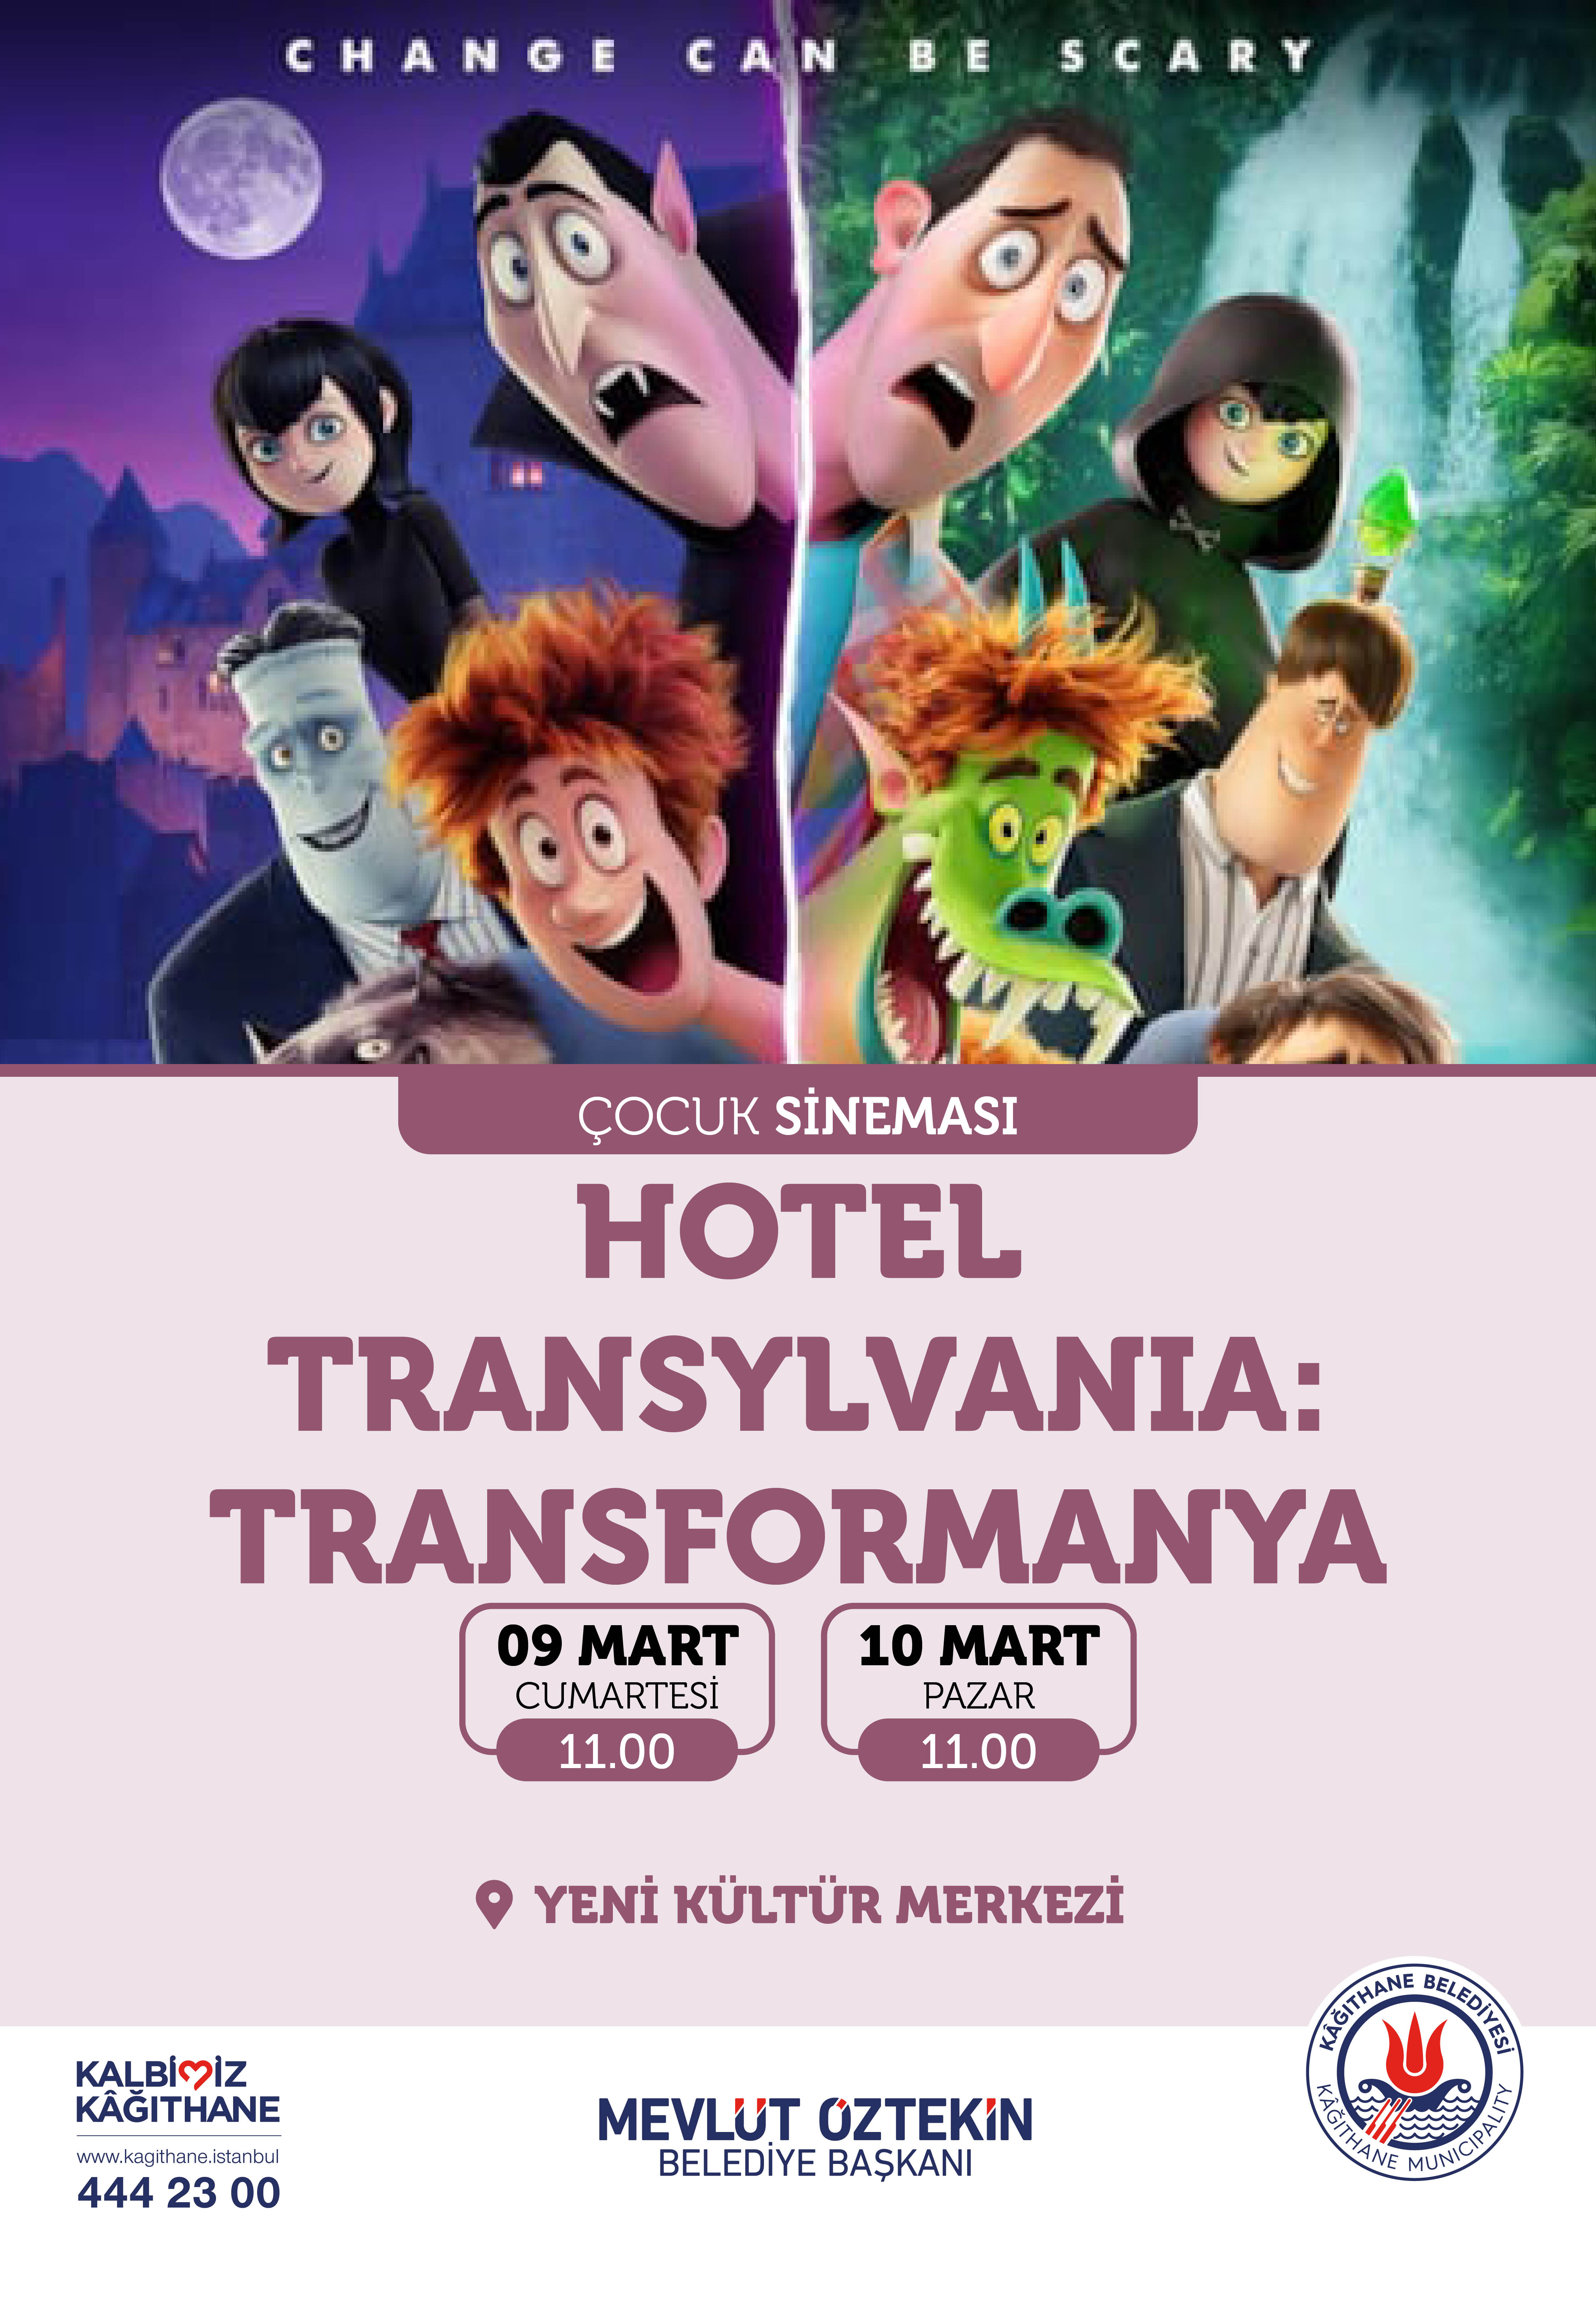 HOTEL TRANSYLVANIA: TRANSFORMANYA